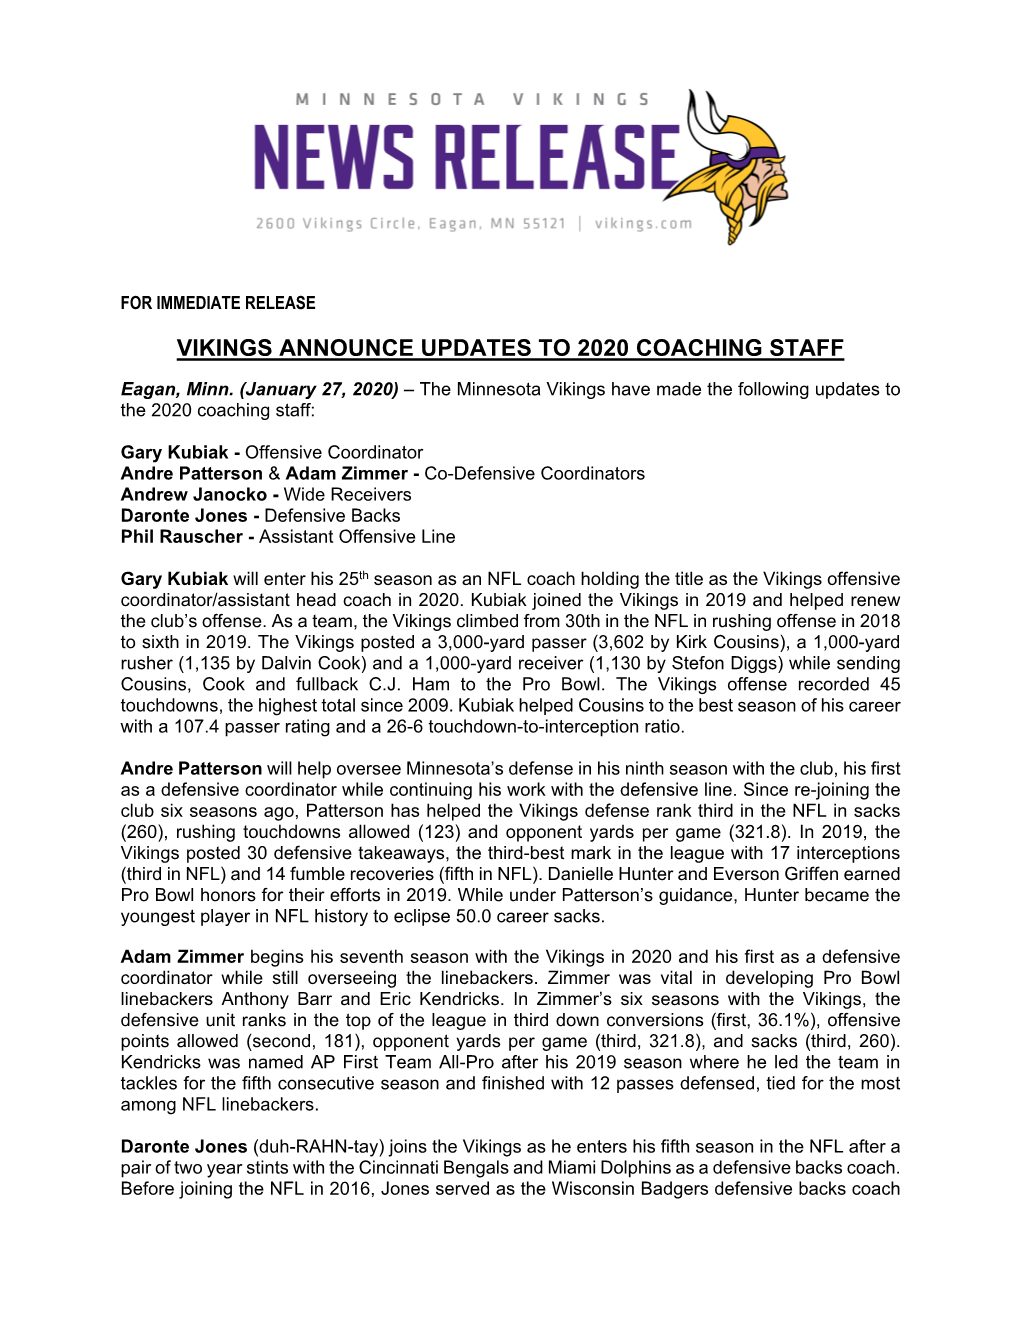 Vikings Announce Updates to 2020 Coaching Staff